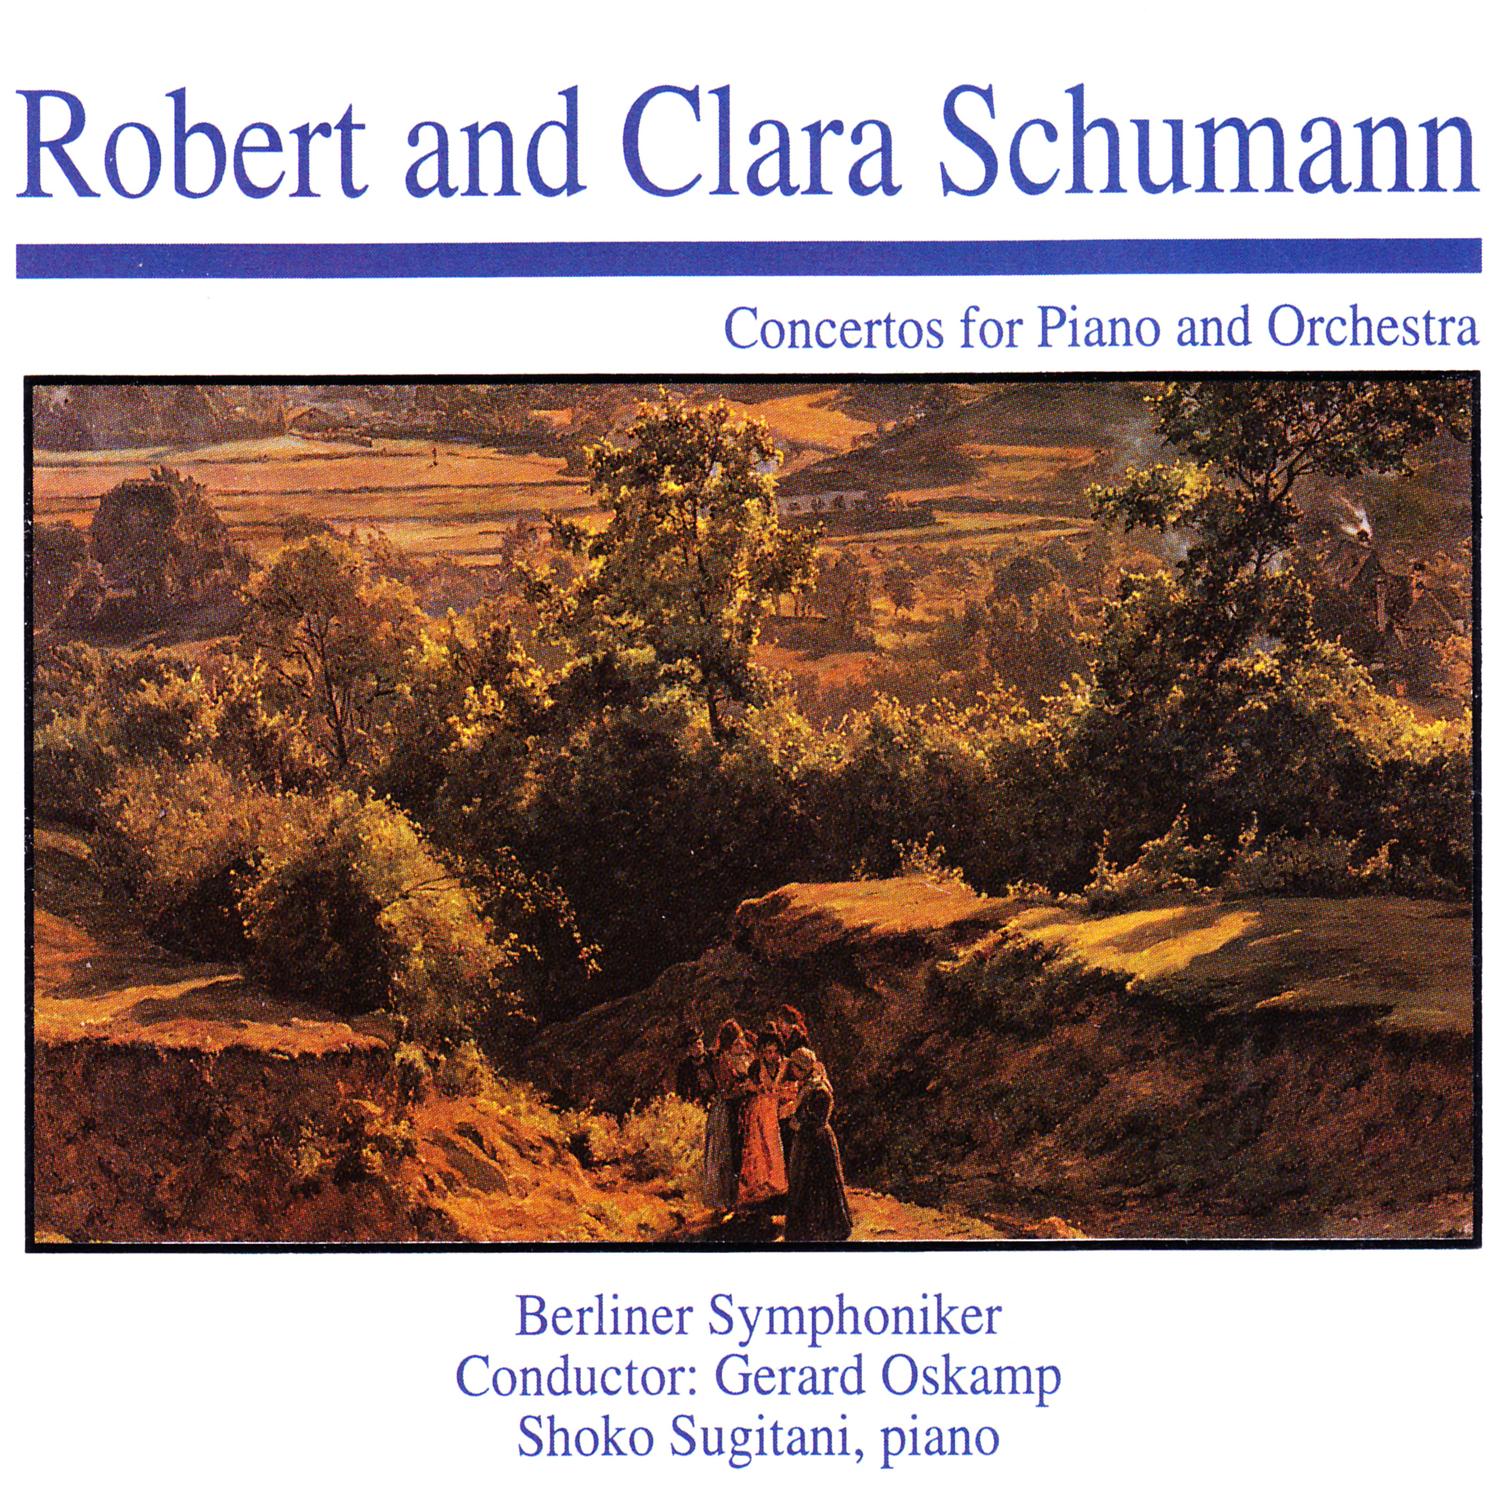 Robert and Clara Schumann: Concertos for Piano and Orchestra